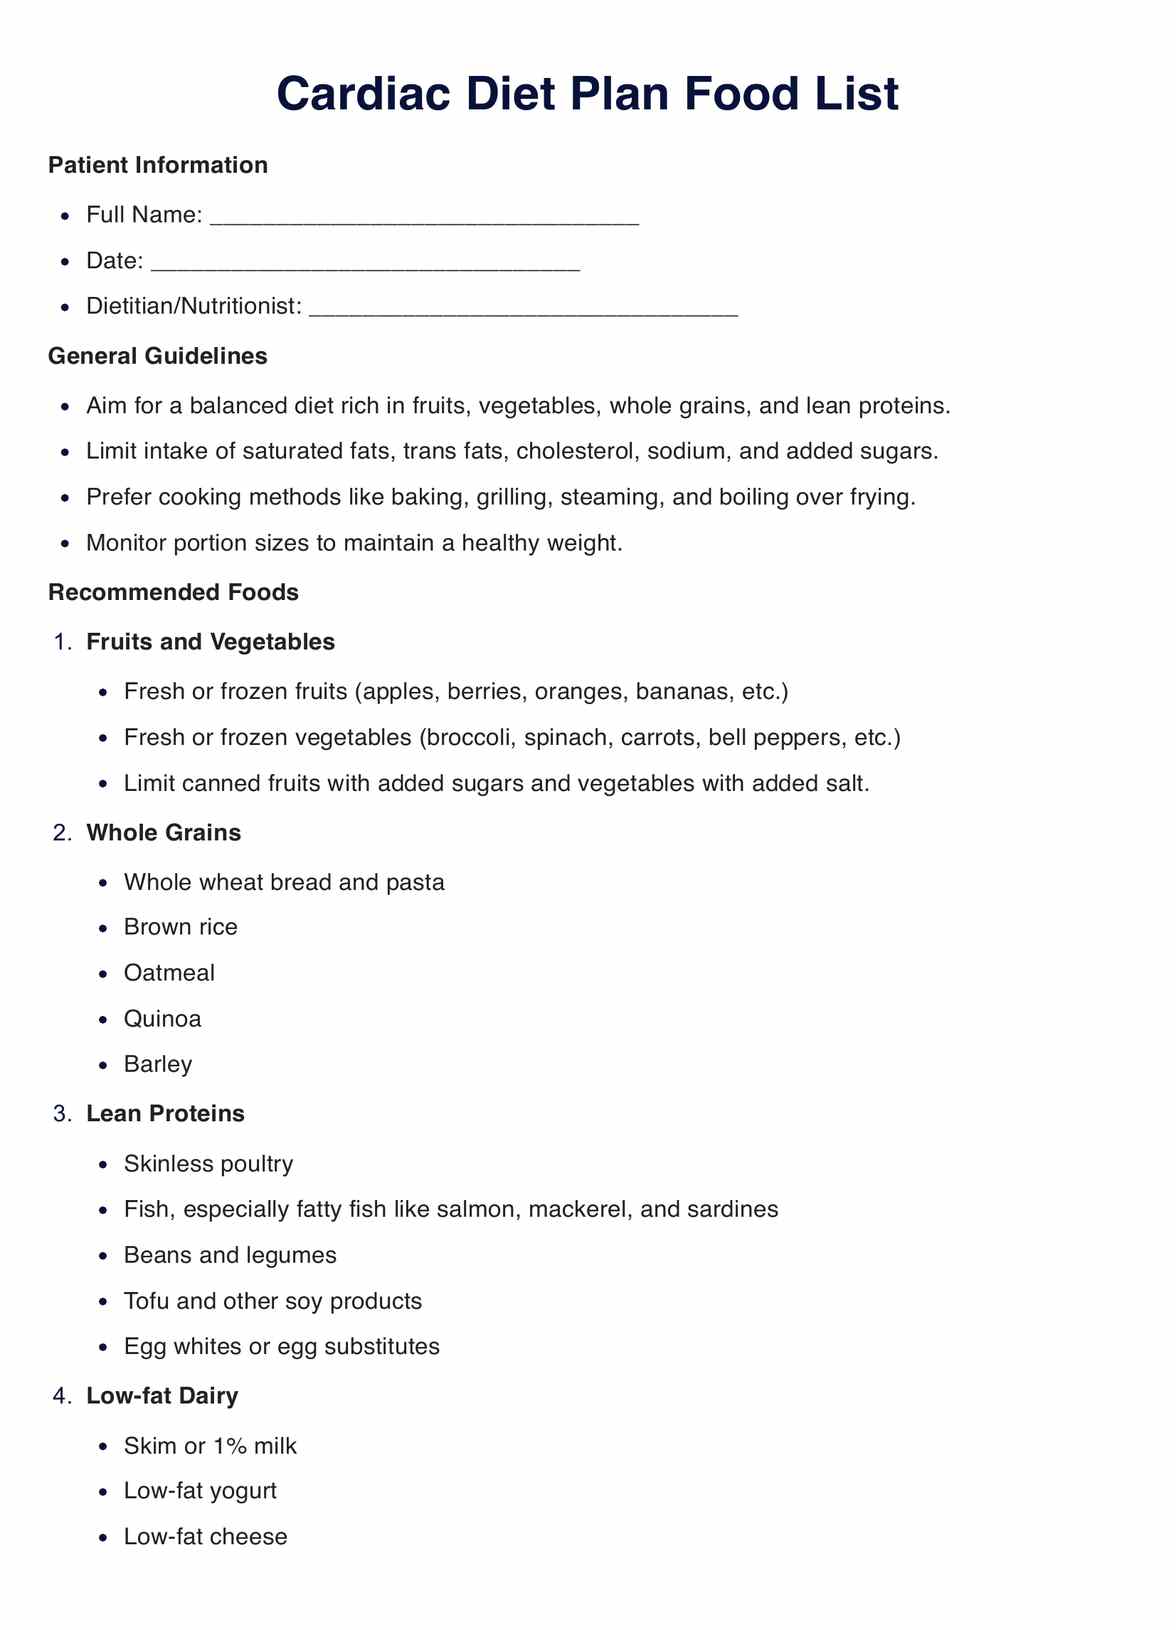 Cardiac Diet Plan Food List PDF Example